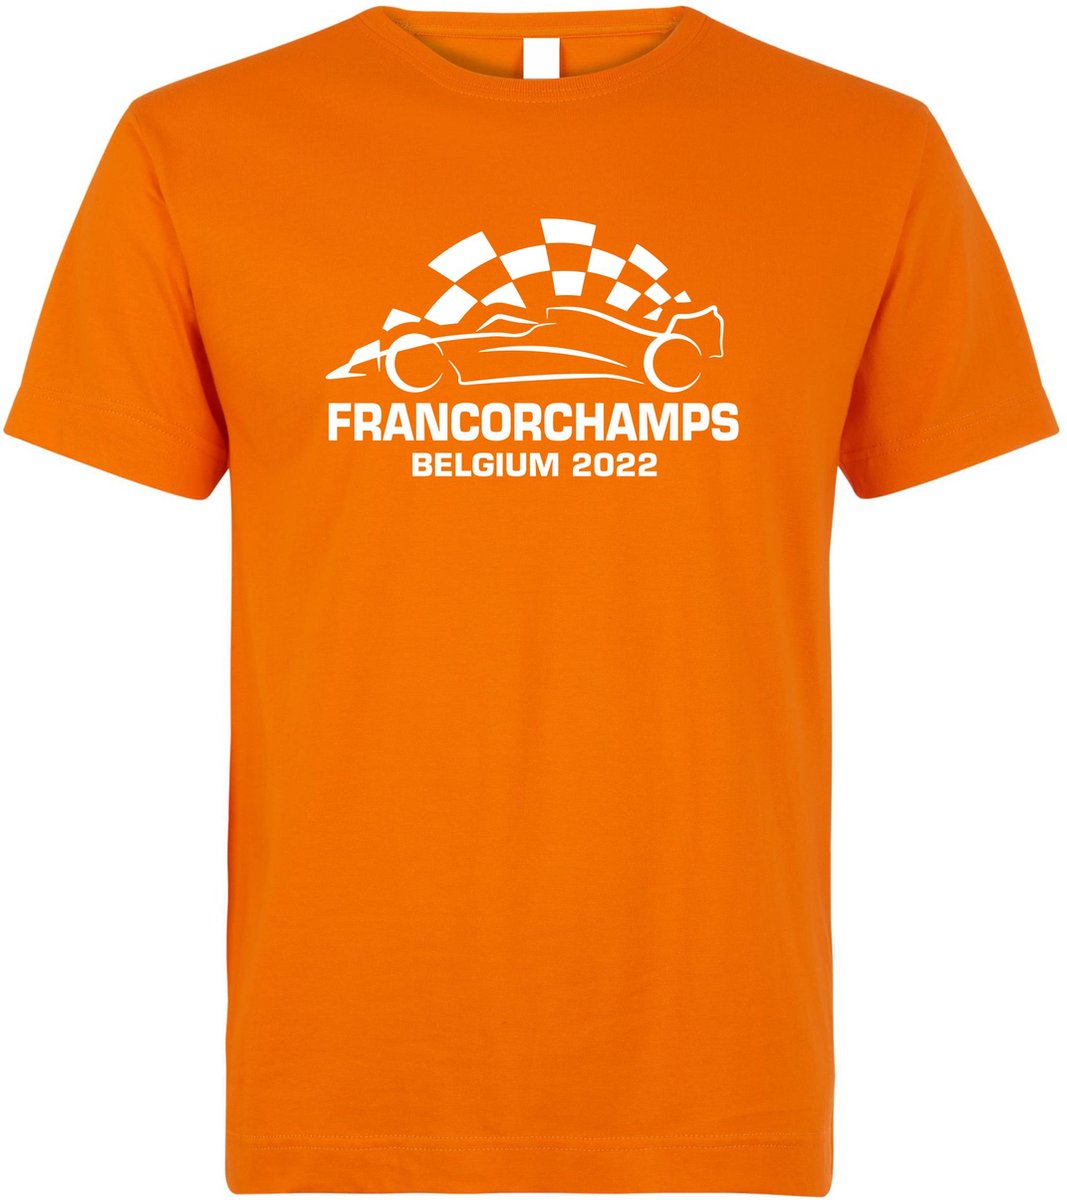 T-shirt kinderen Francorchamps Belgium 2022 met raceauto | Max Verstappen / Red Bull Racing / Formule 1 fan | Grand Prix Circuit Spa-Francorchamps | kleding shirt | Oranje | maat 140